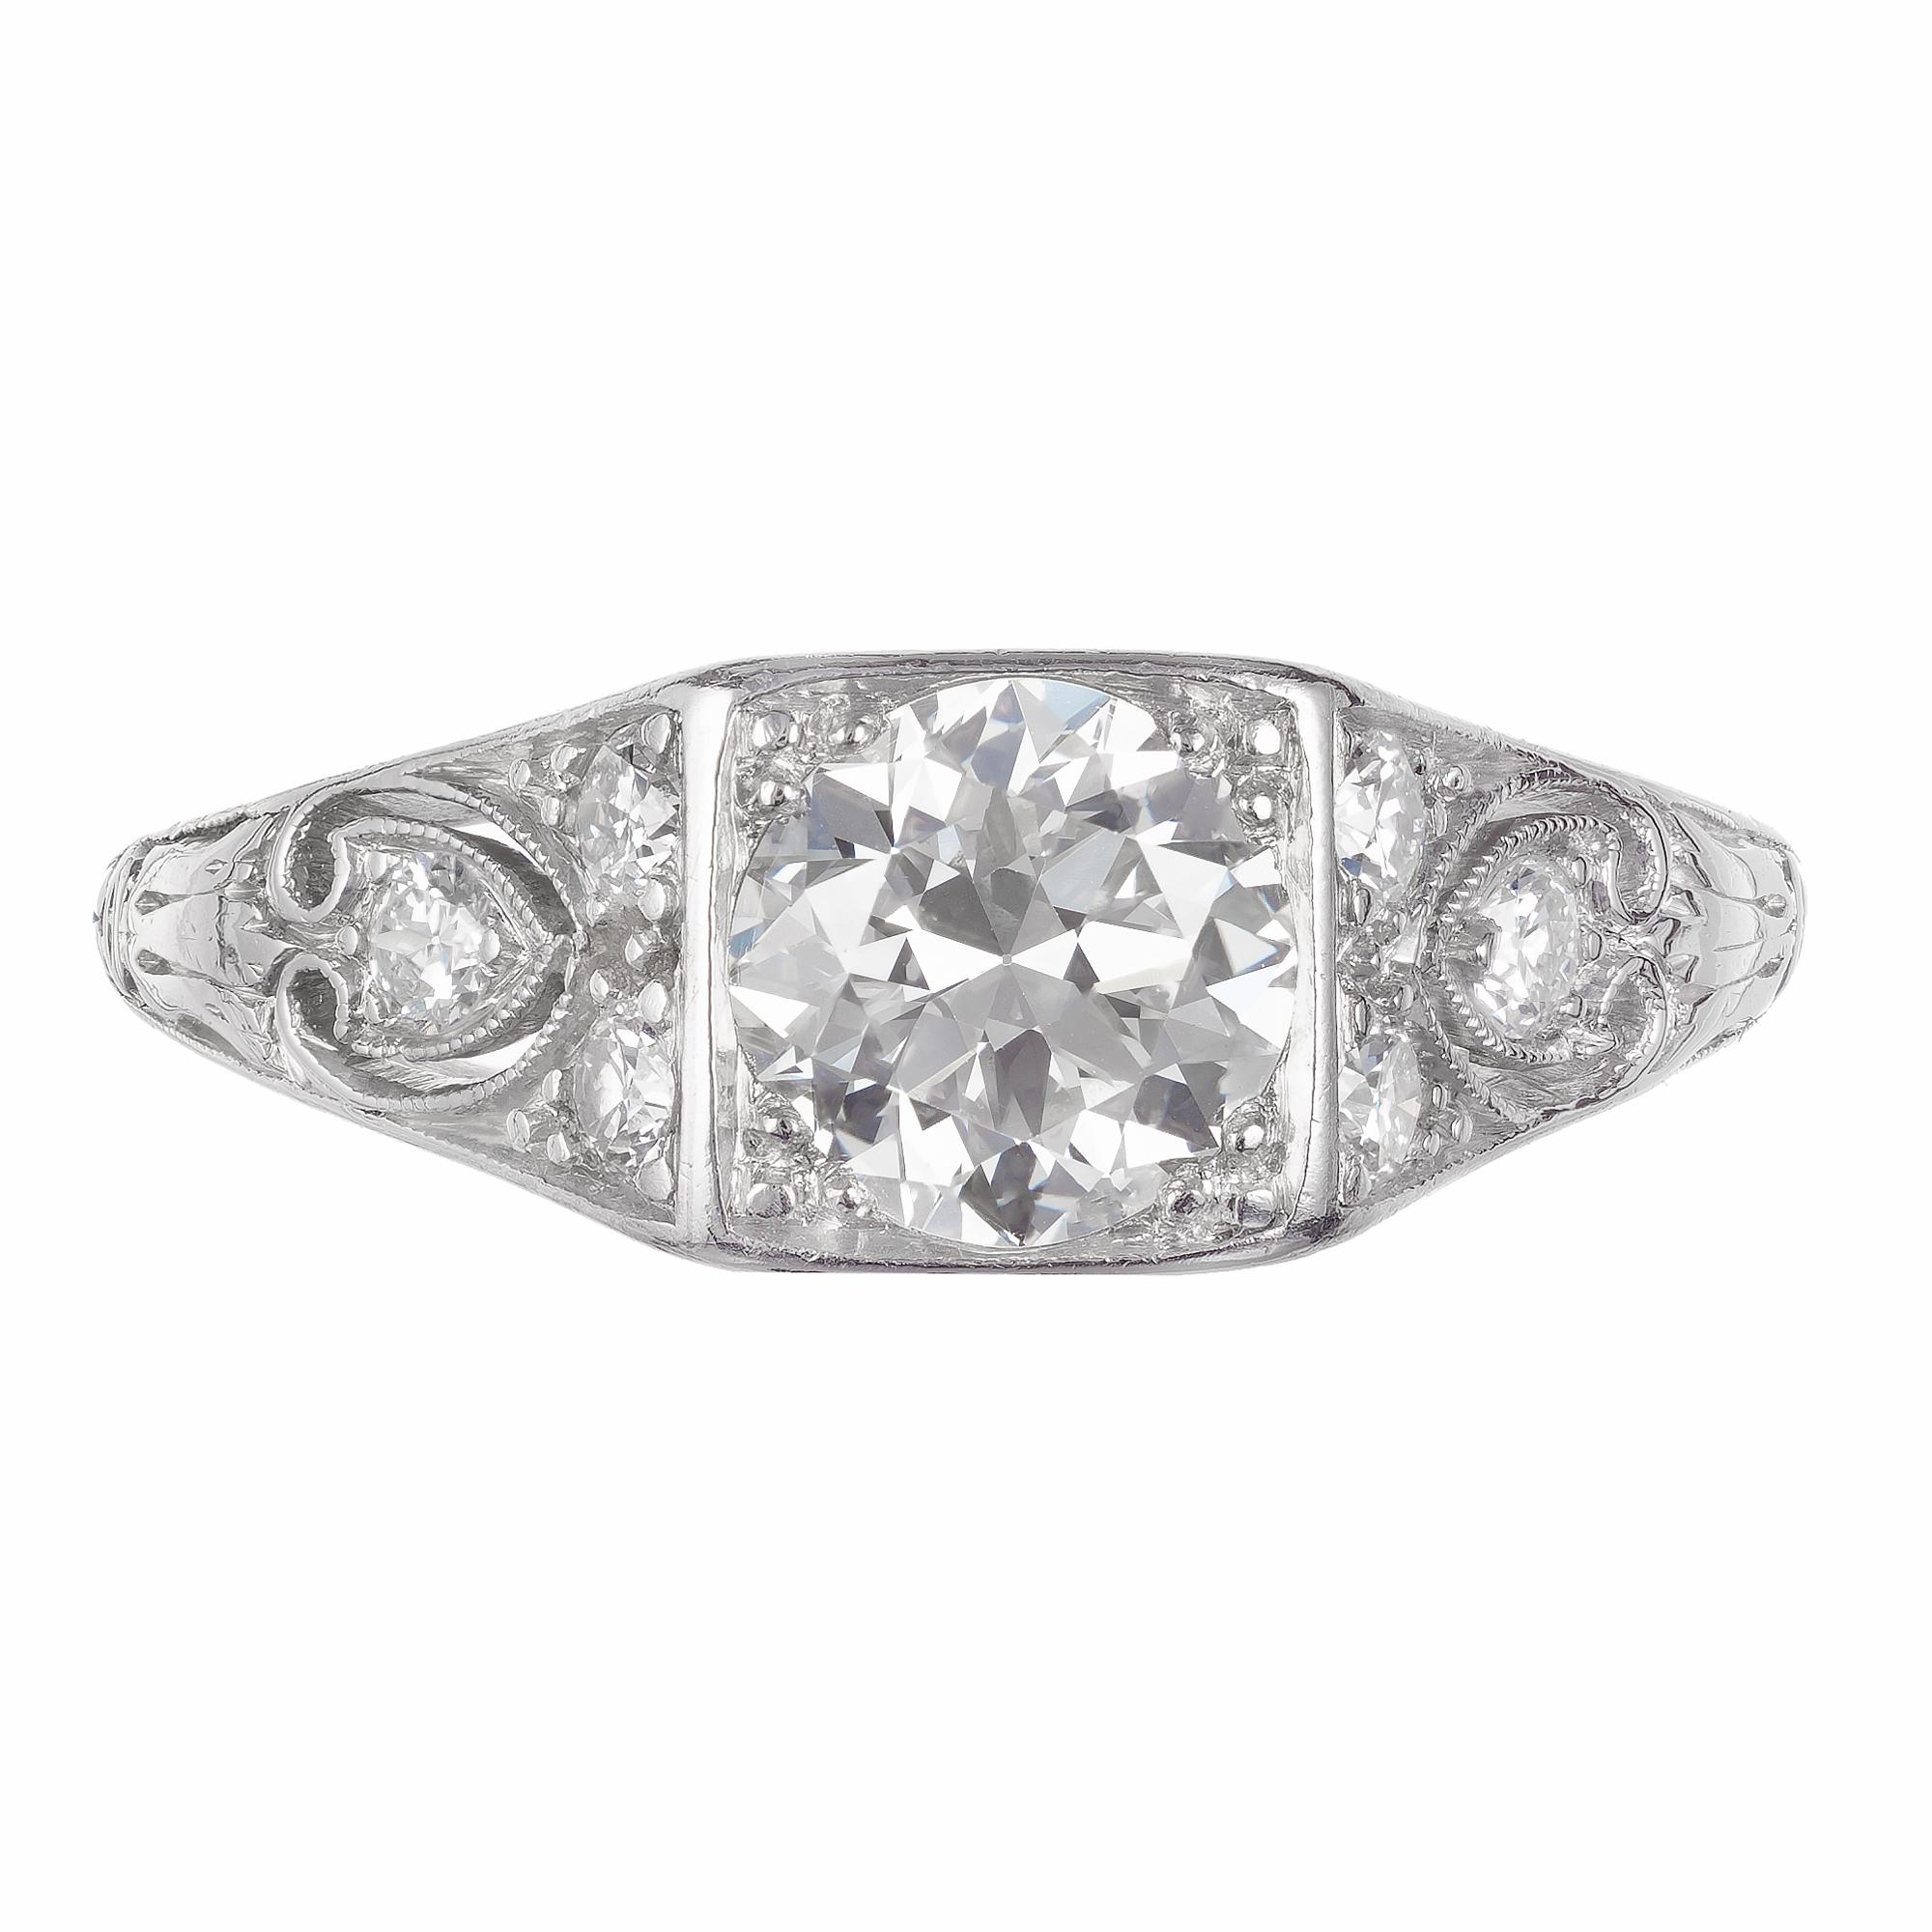 .80 diamond engagement ring. Pierced filigree Edwardian Art Deco old European cut center diamond with 6 old European cut accent diamonds.  EGL certified. 

1 old European cut K-L VS diamond, Approximate .80ct EGL Certificate # US400124924D
6 old